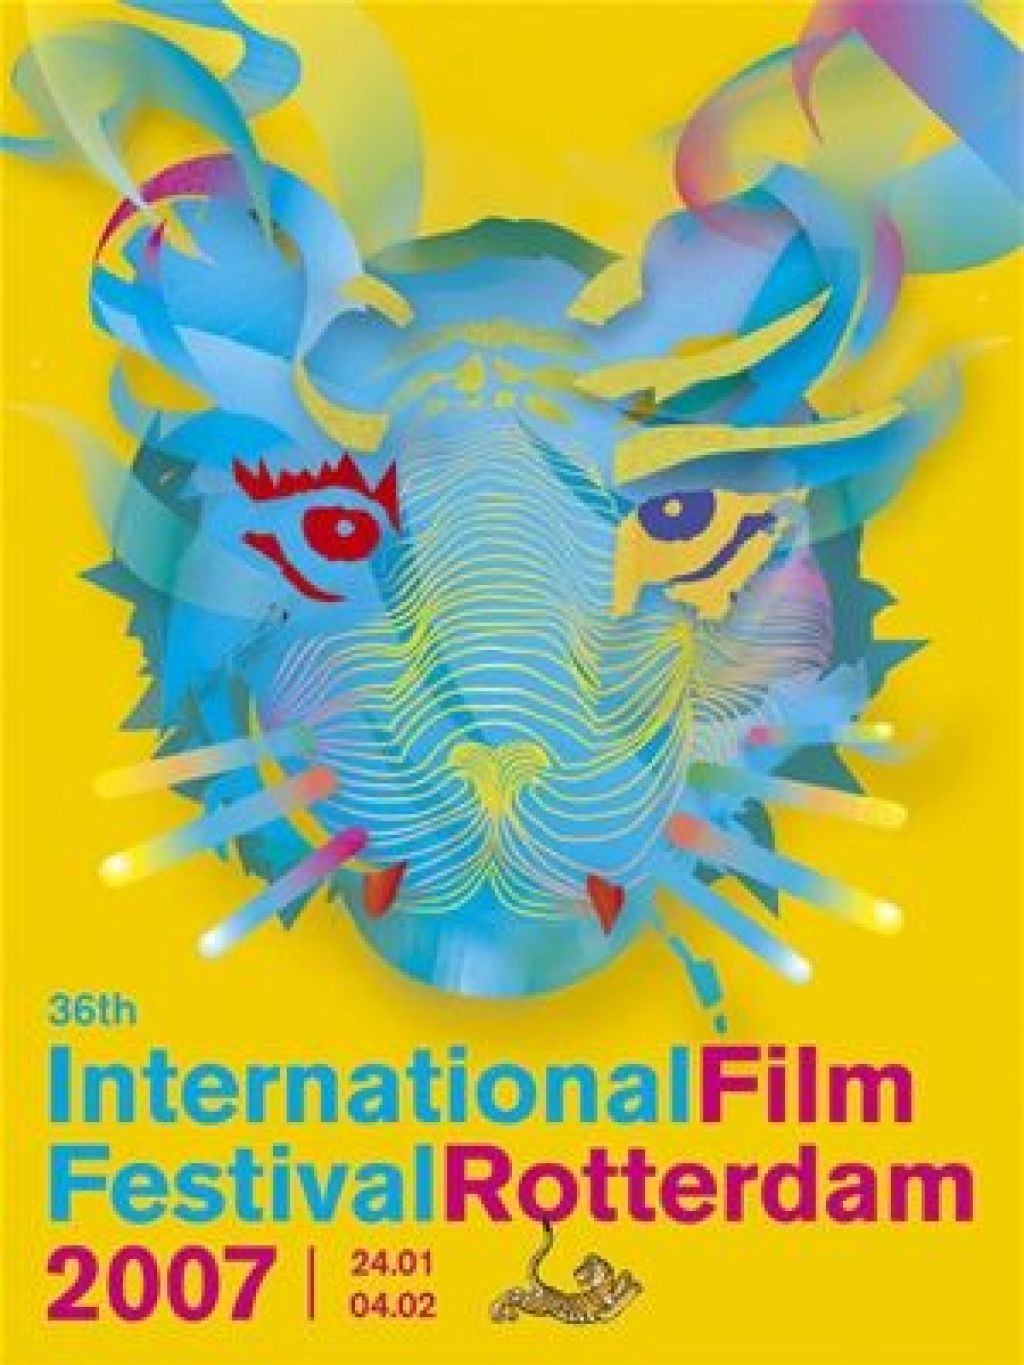 Rotterdam gosti svetovne neodvisne filme